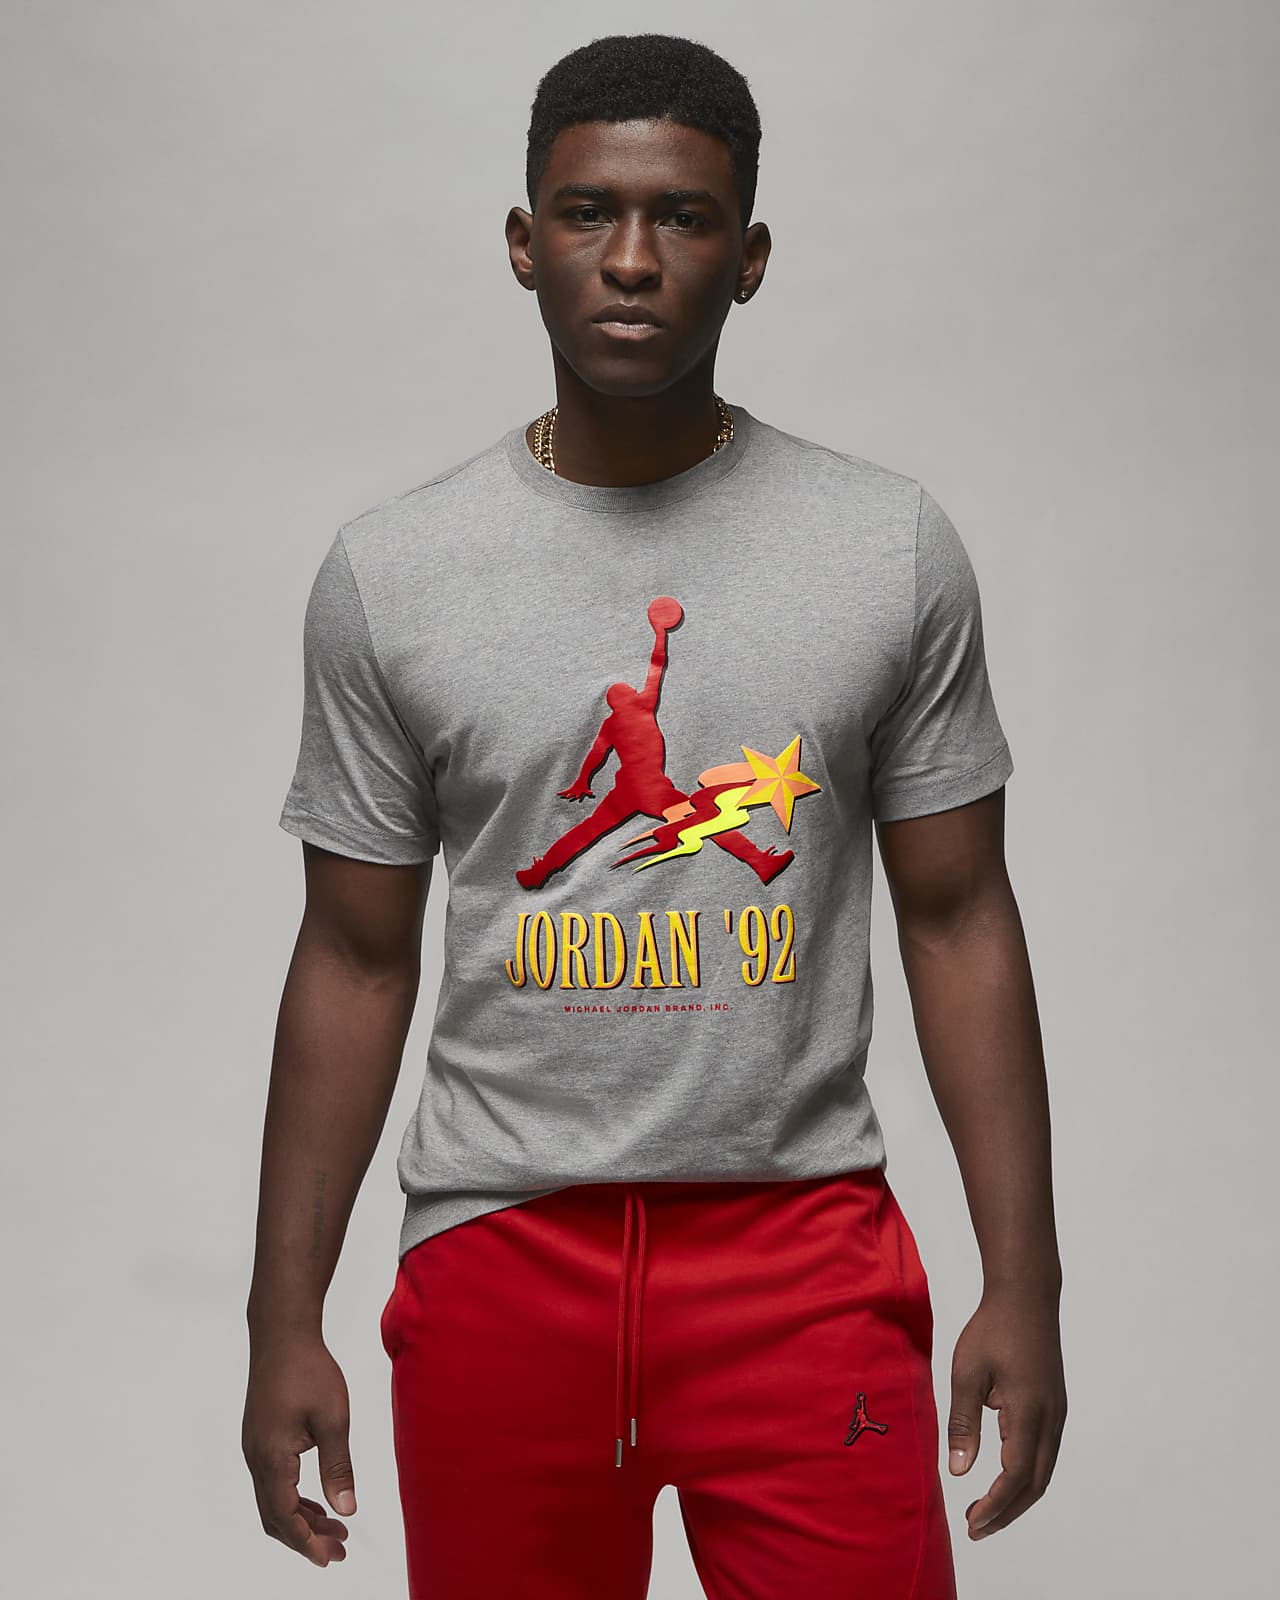 Restringido jefe Paine Gillic Jordan Camiseta - Hombre. Nike ES